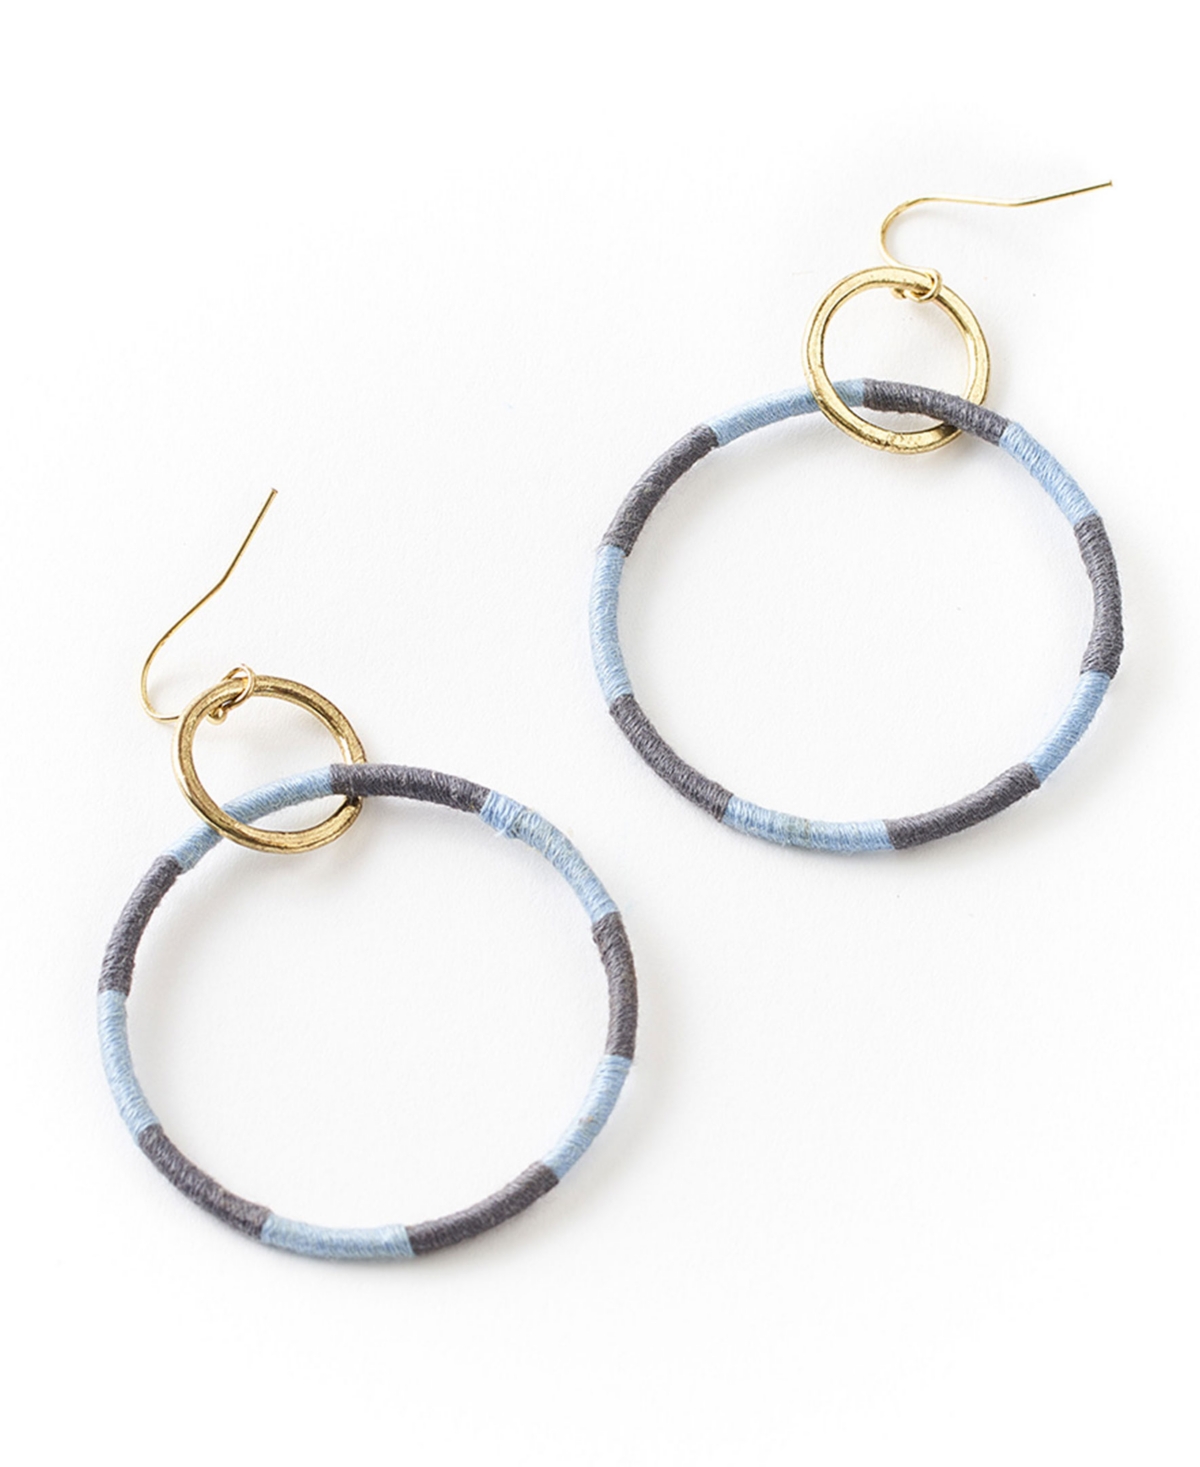 Matr Boomie Kaia Double Hoop Earrings - Blue Thread Wrapped